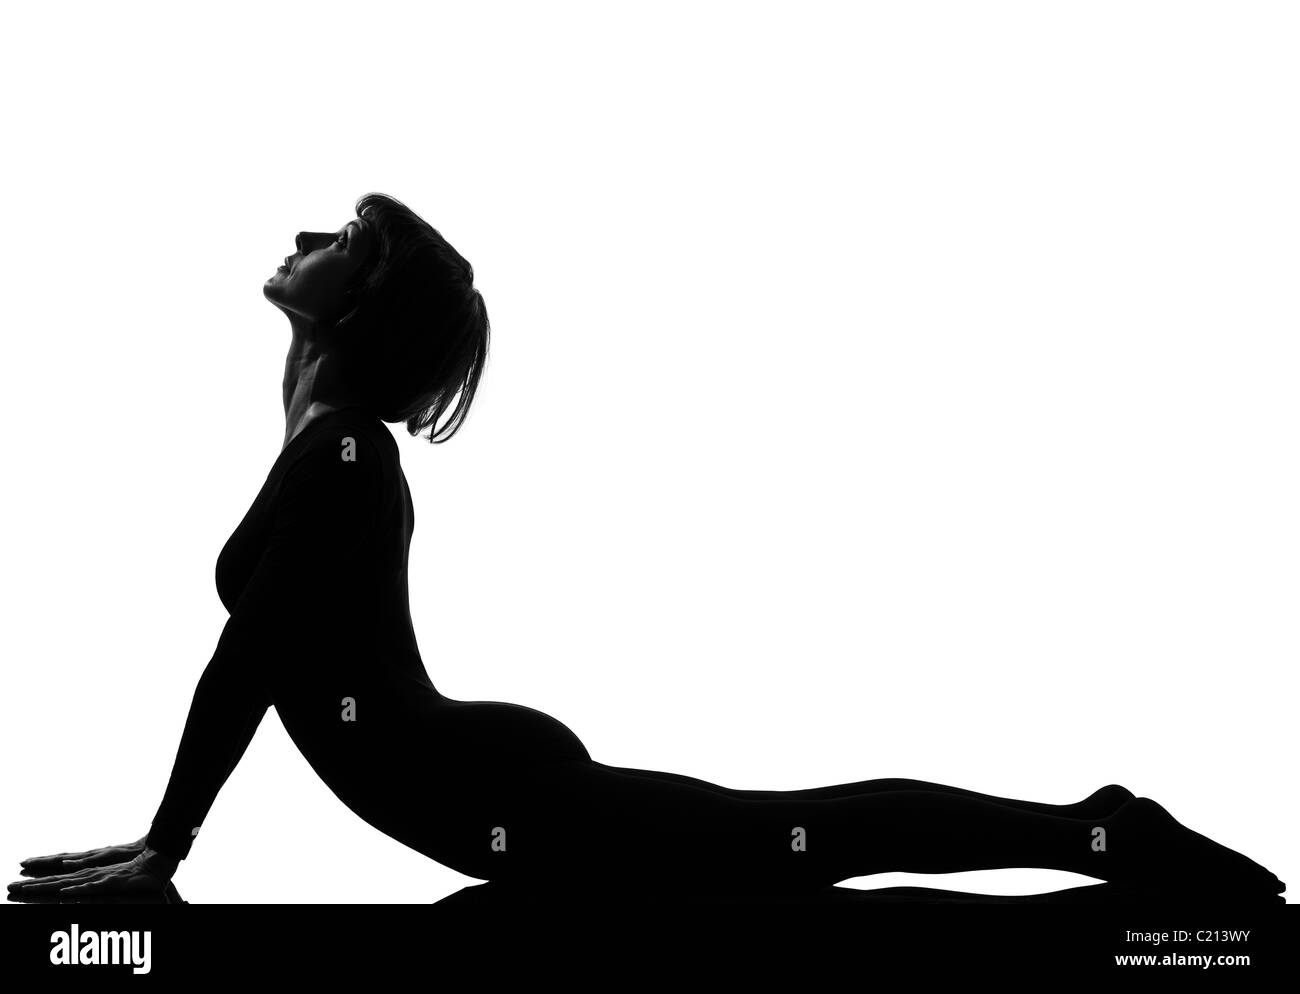 Donna sun salutation yoga surya namaskar postura cobra pongono in silouhette studio su sfondo bianco a piena lunghezza Foto Stock